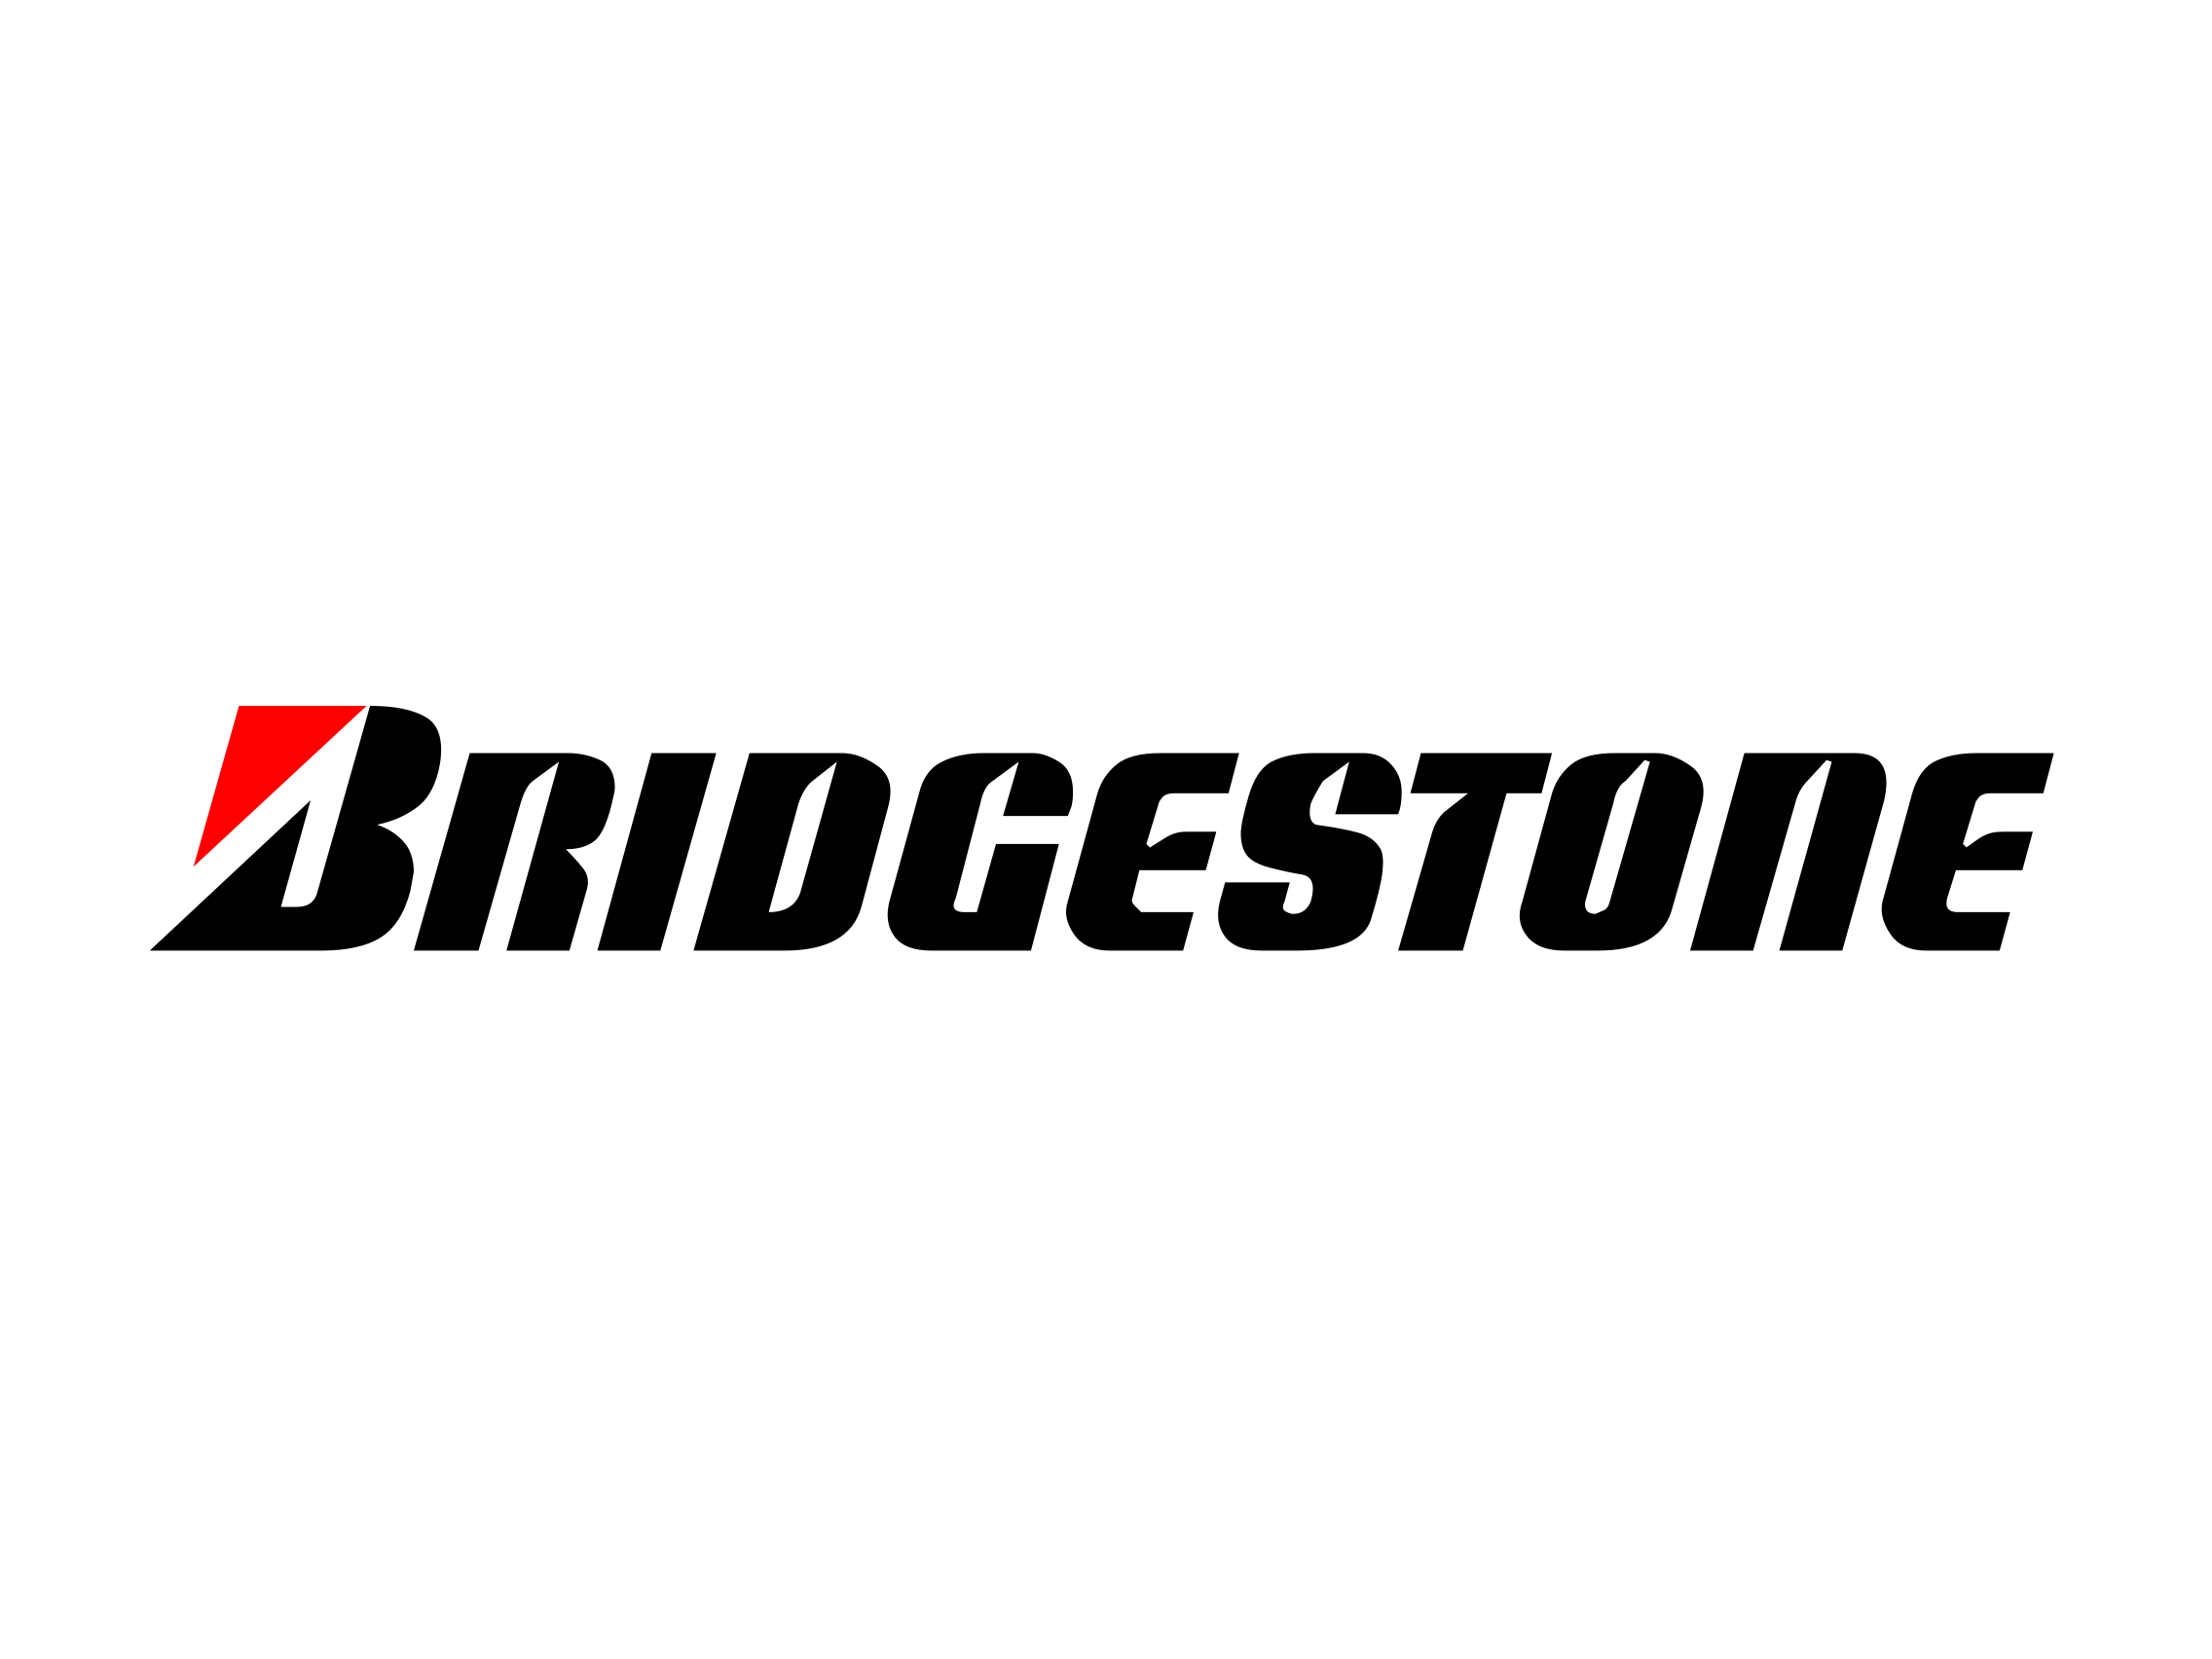 Bridgestone-logo-old.png